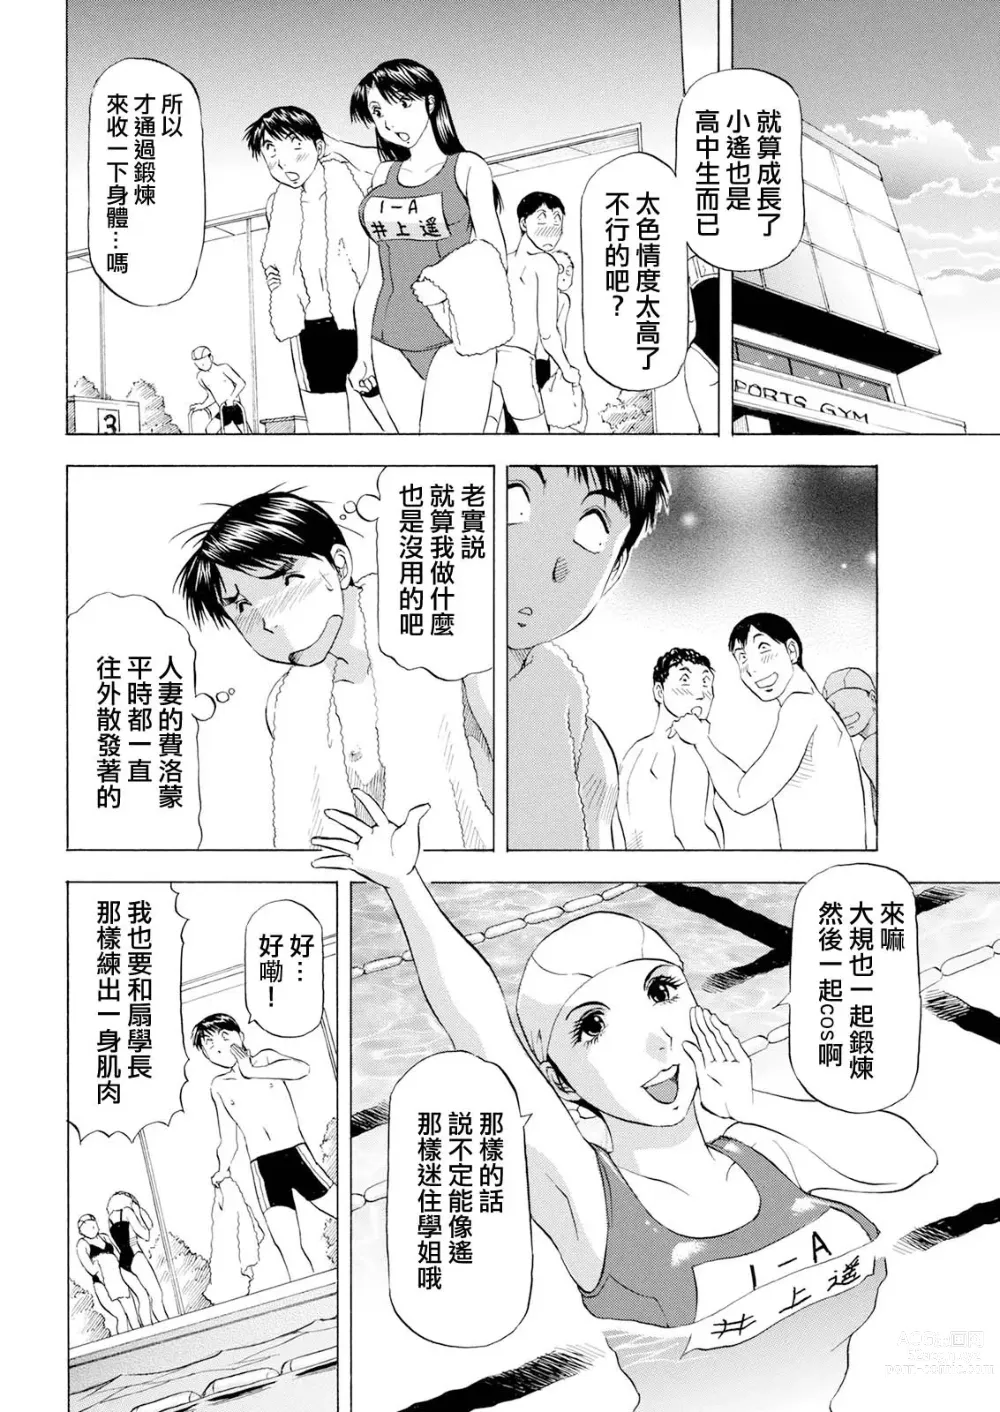 Page 4 of manga S.S.T